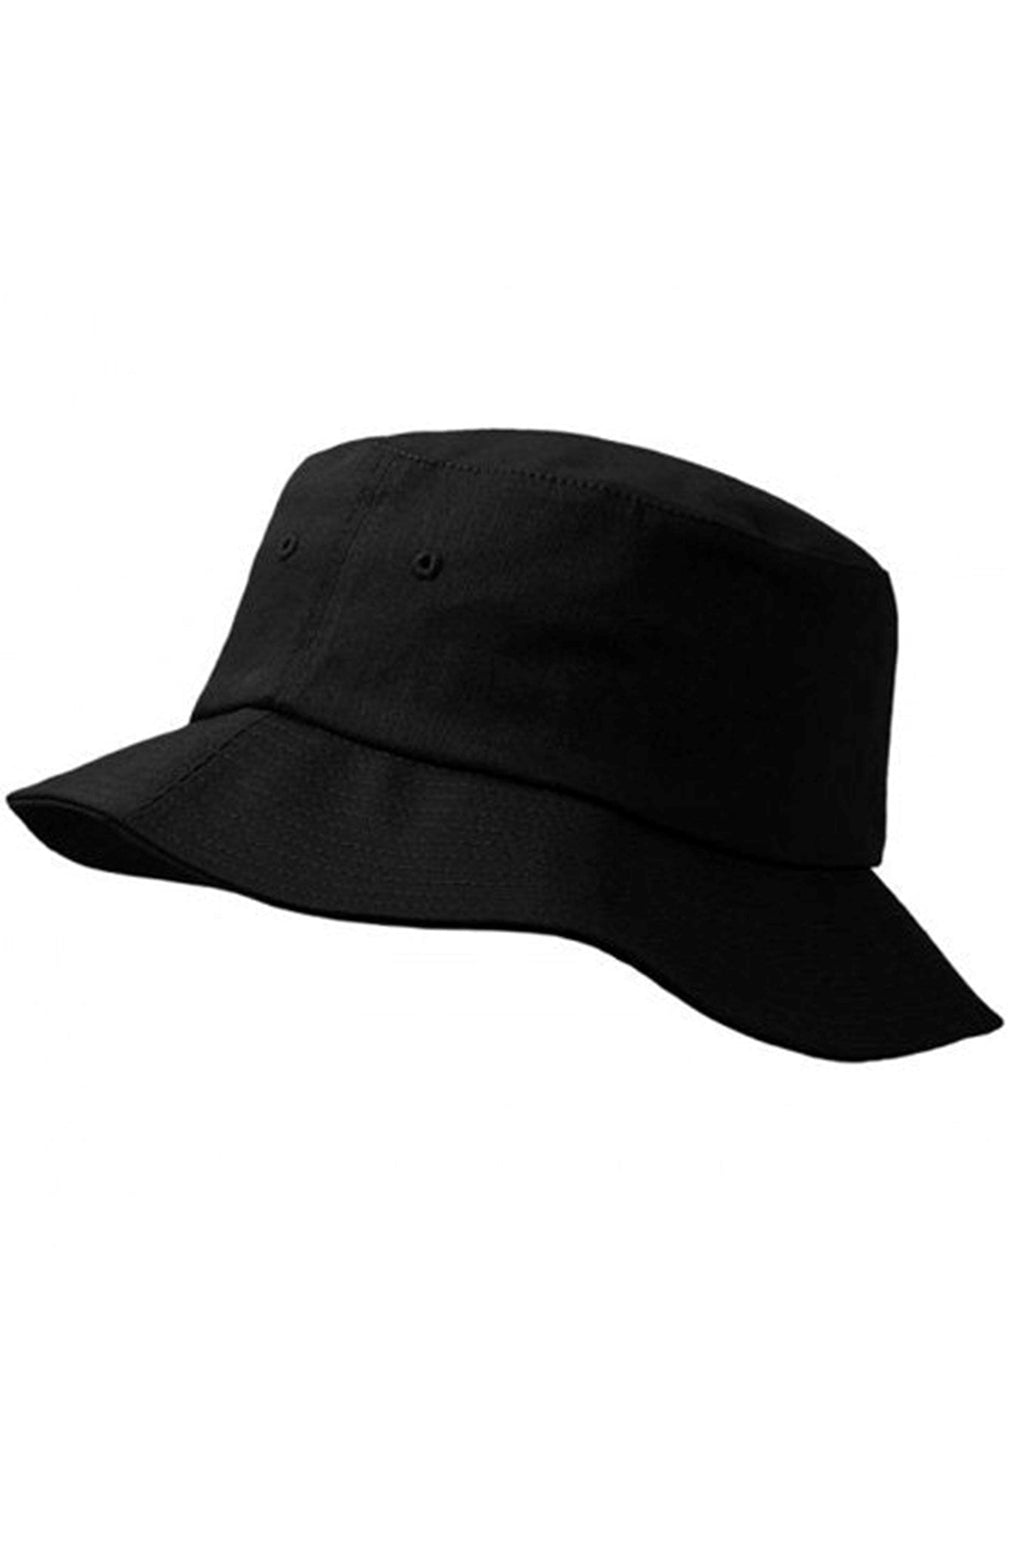 Emmer hoed - zwart